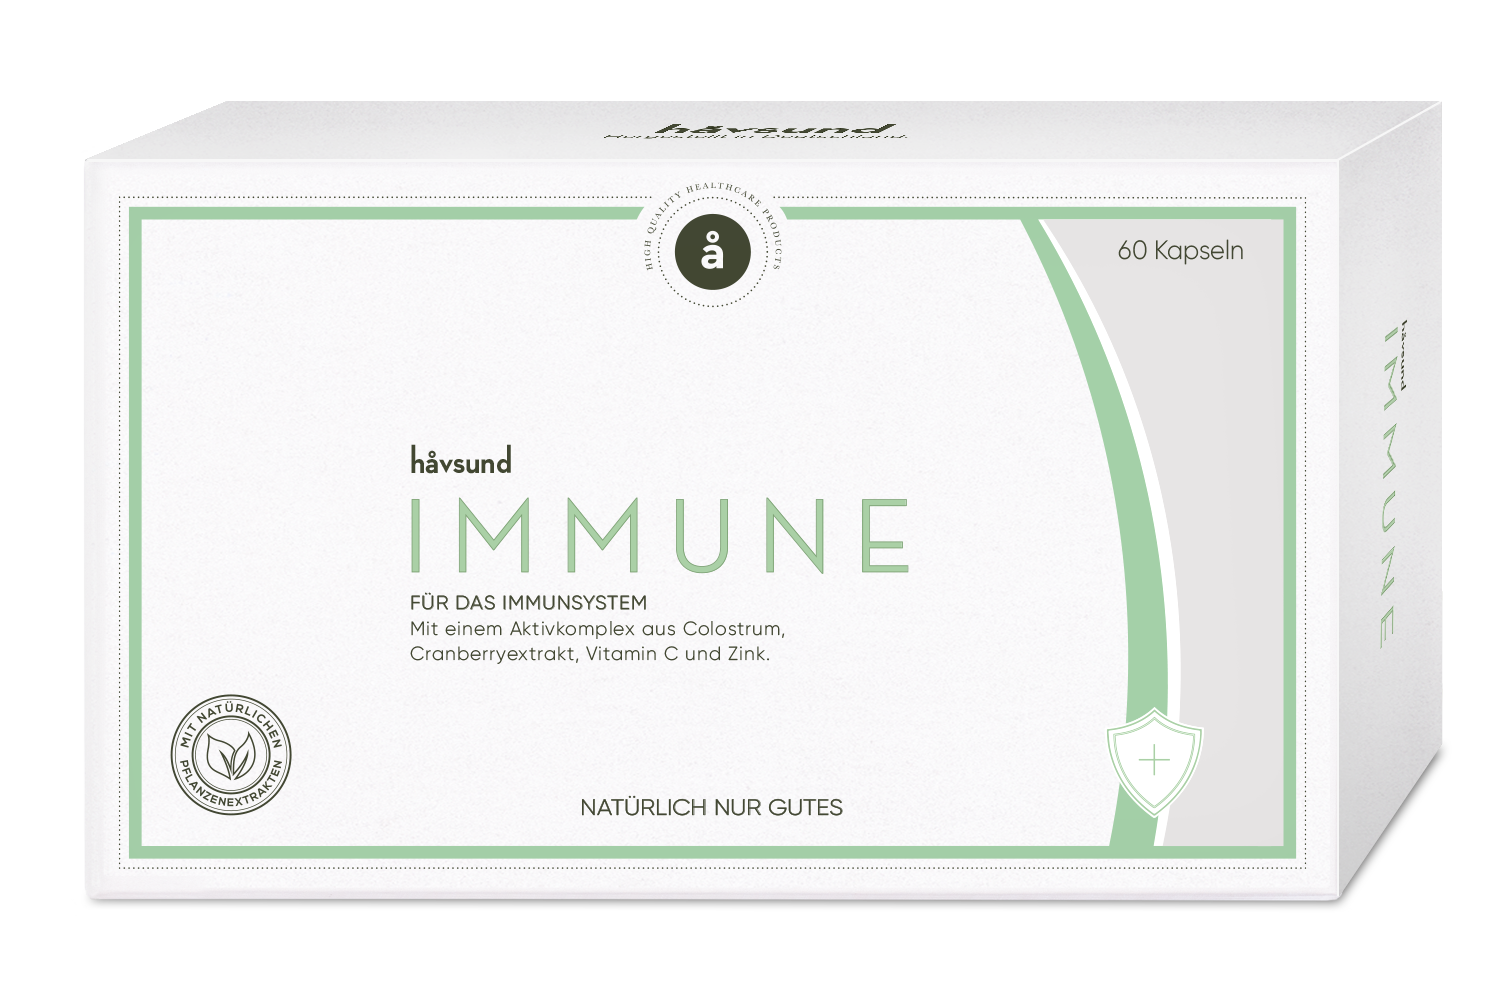 håvsund Immune product image